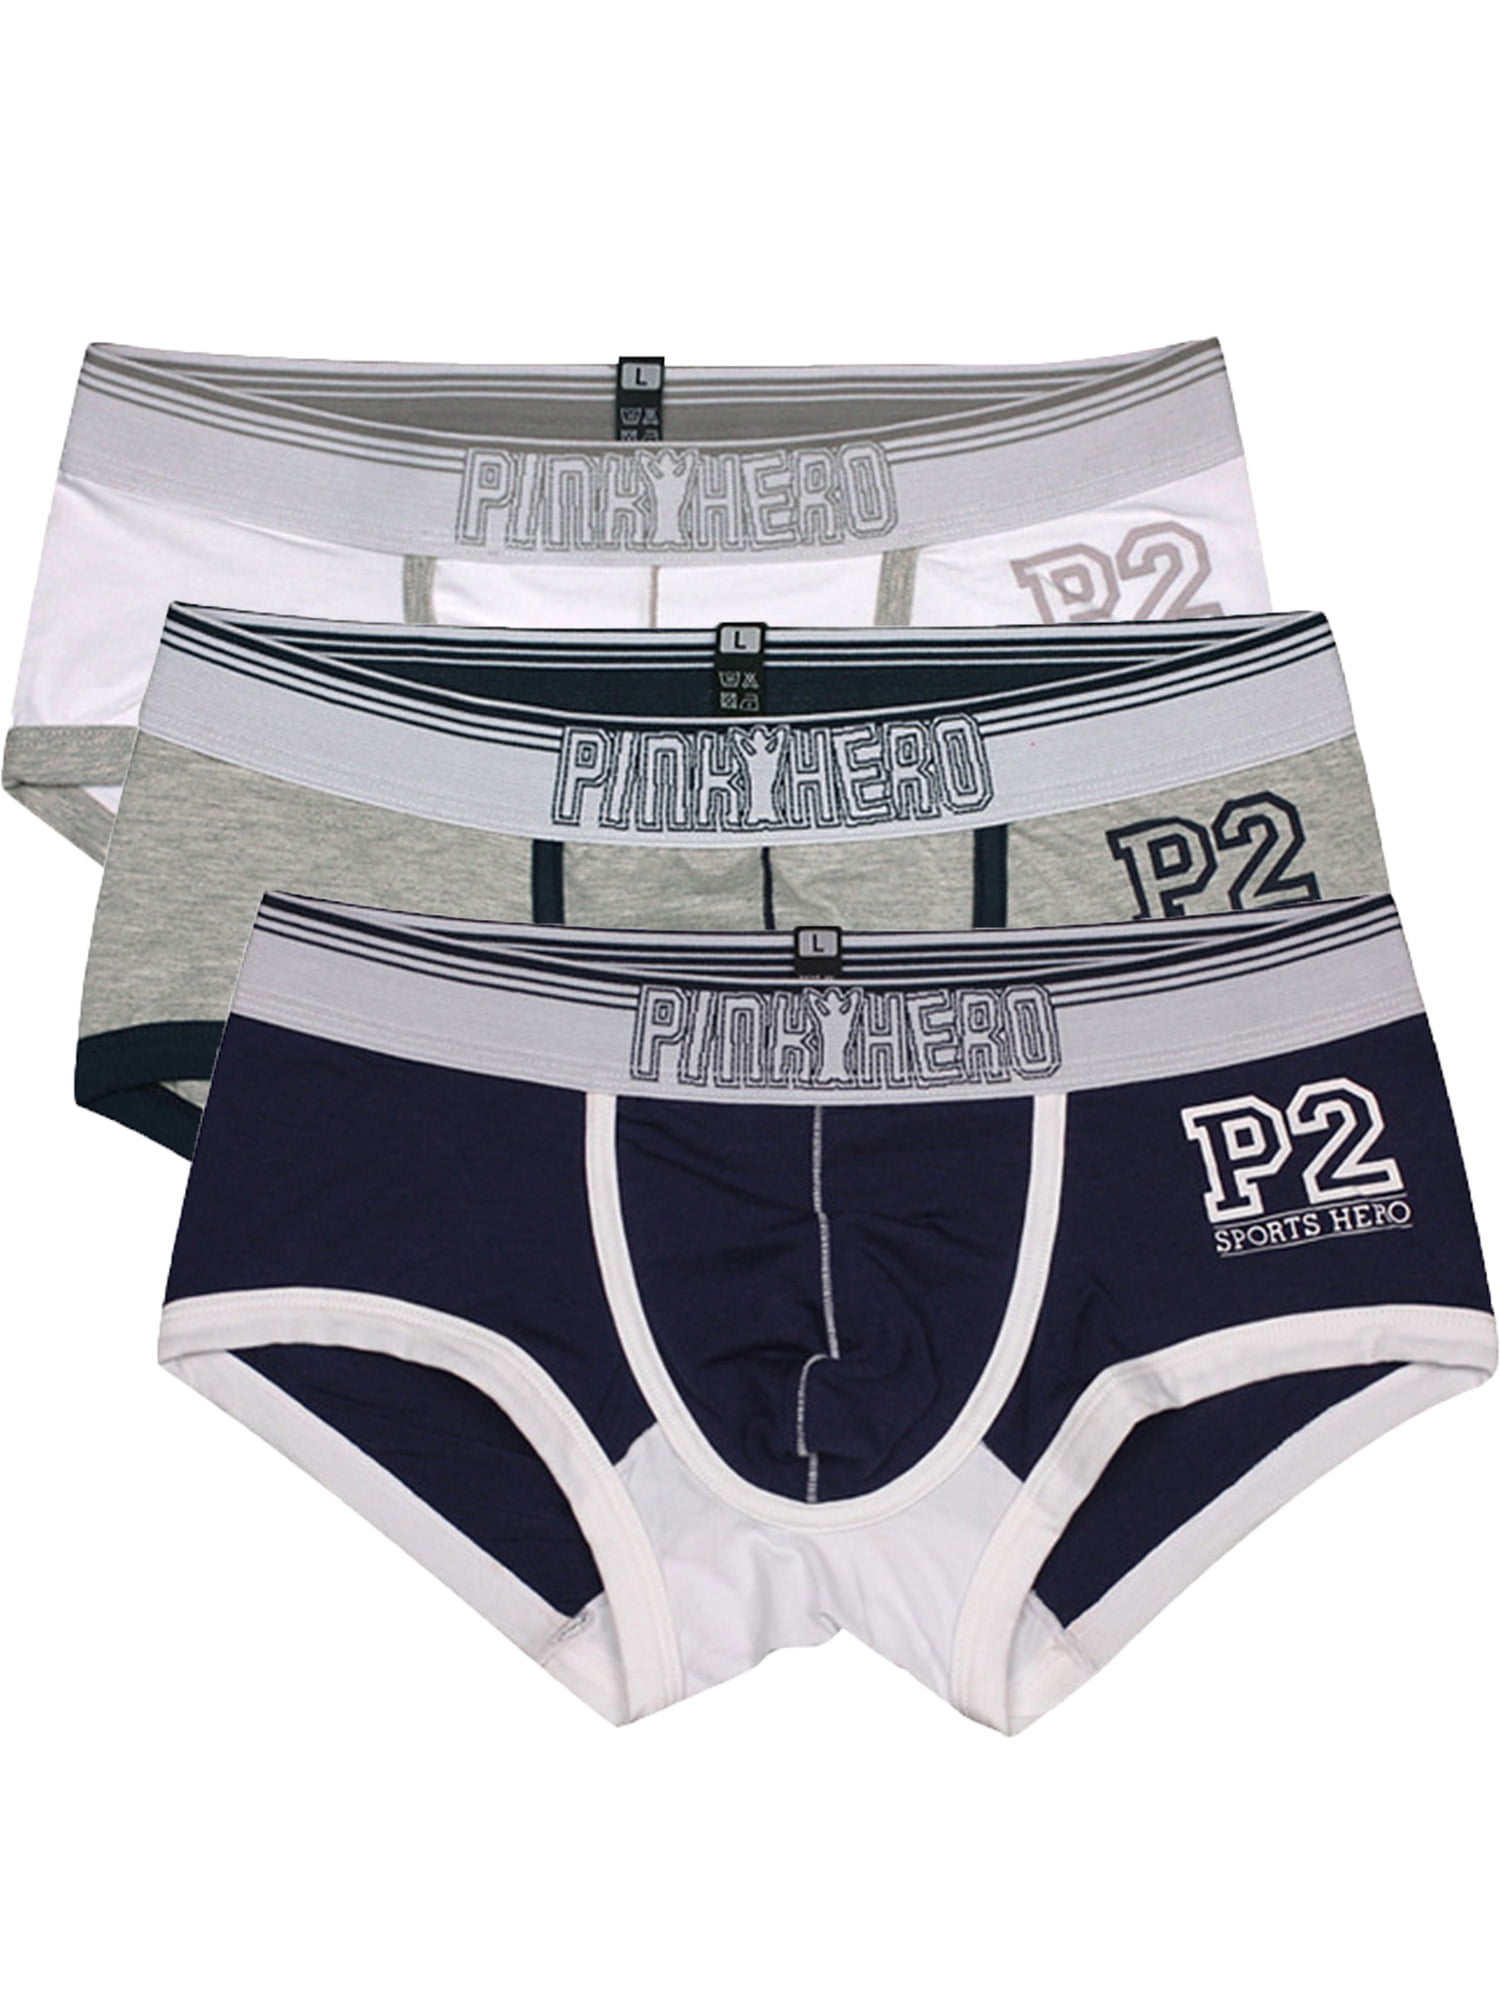 Silk Boxer Shorts Men Underwear Underpants Soft Briefs Trunk Rose Gray S M L 